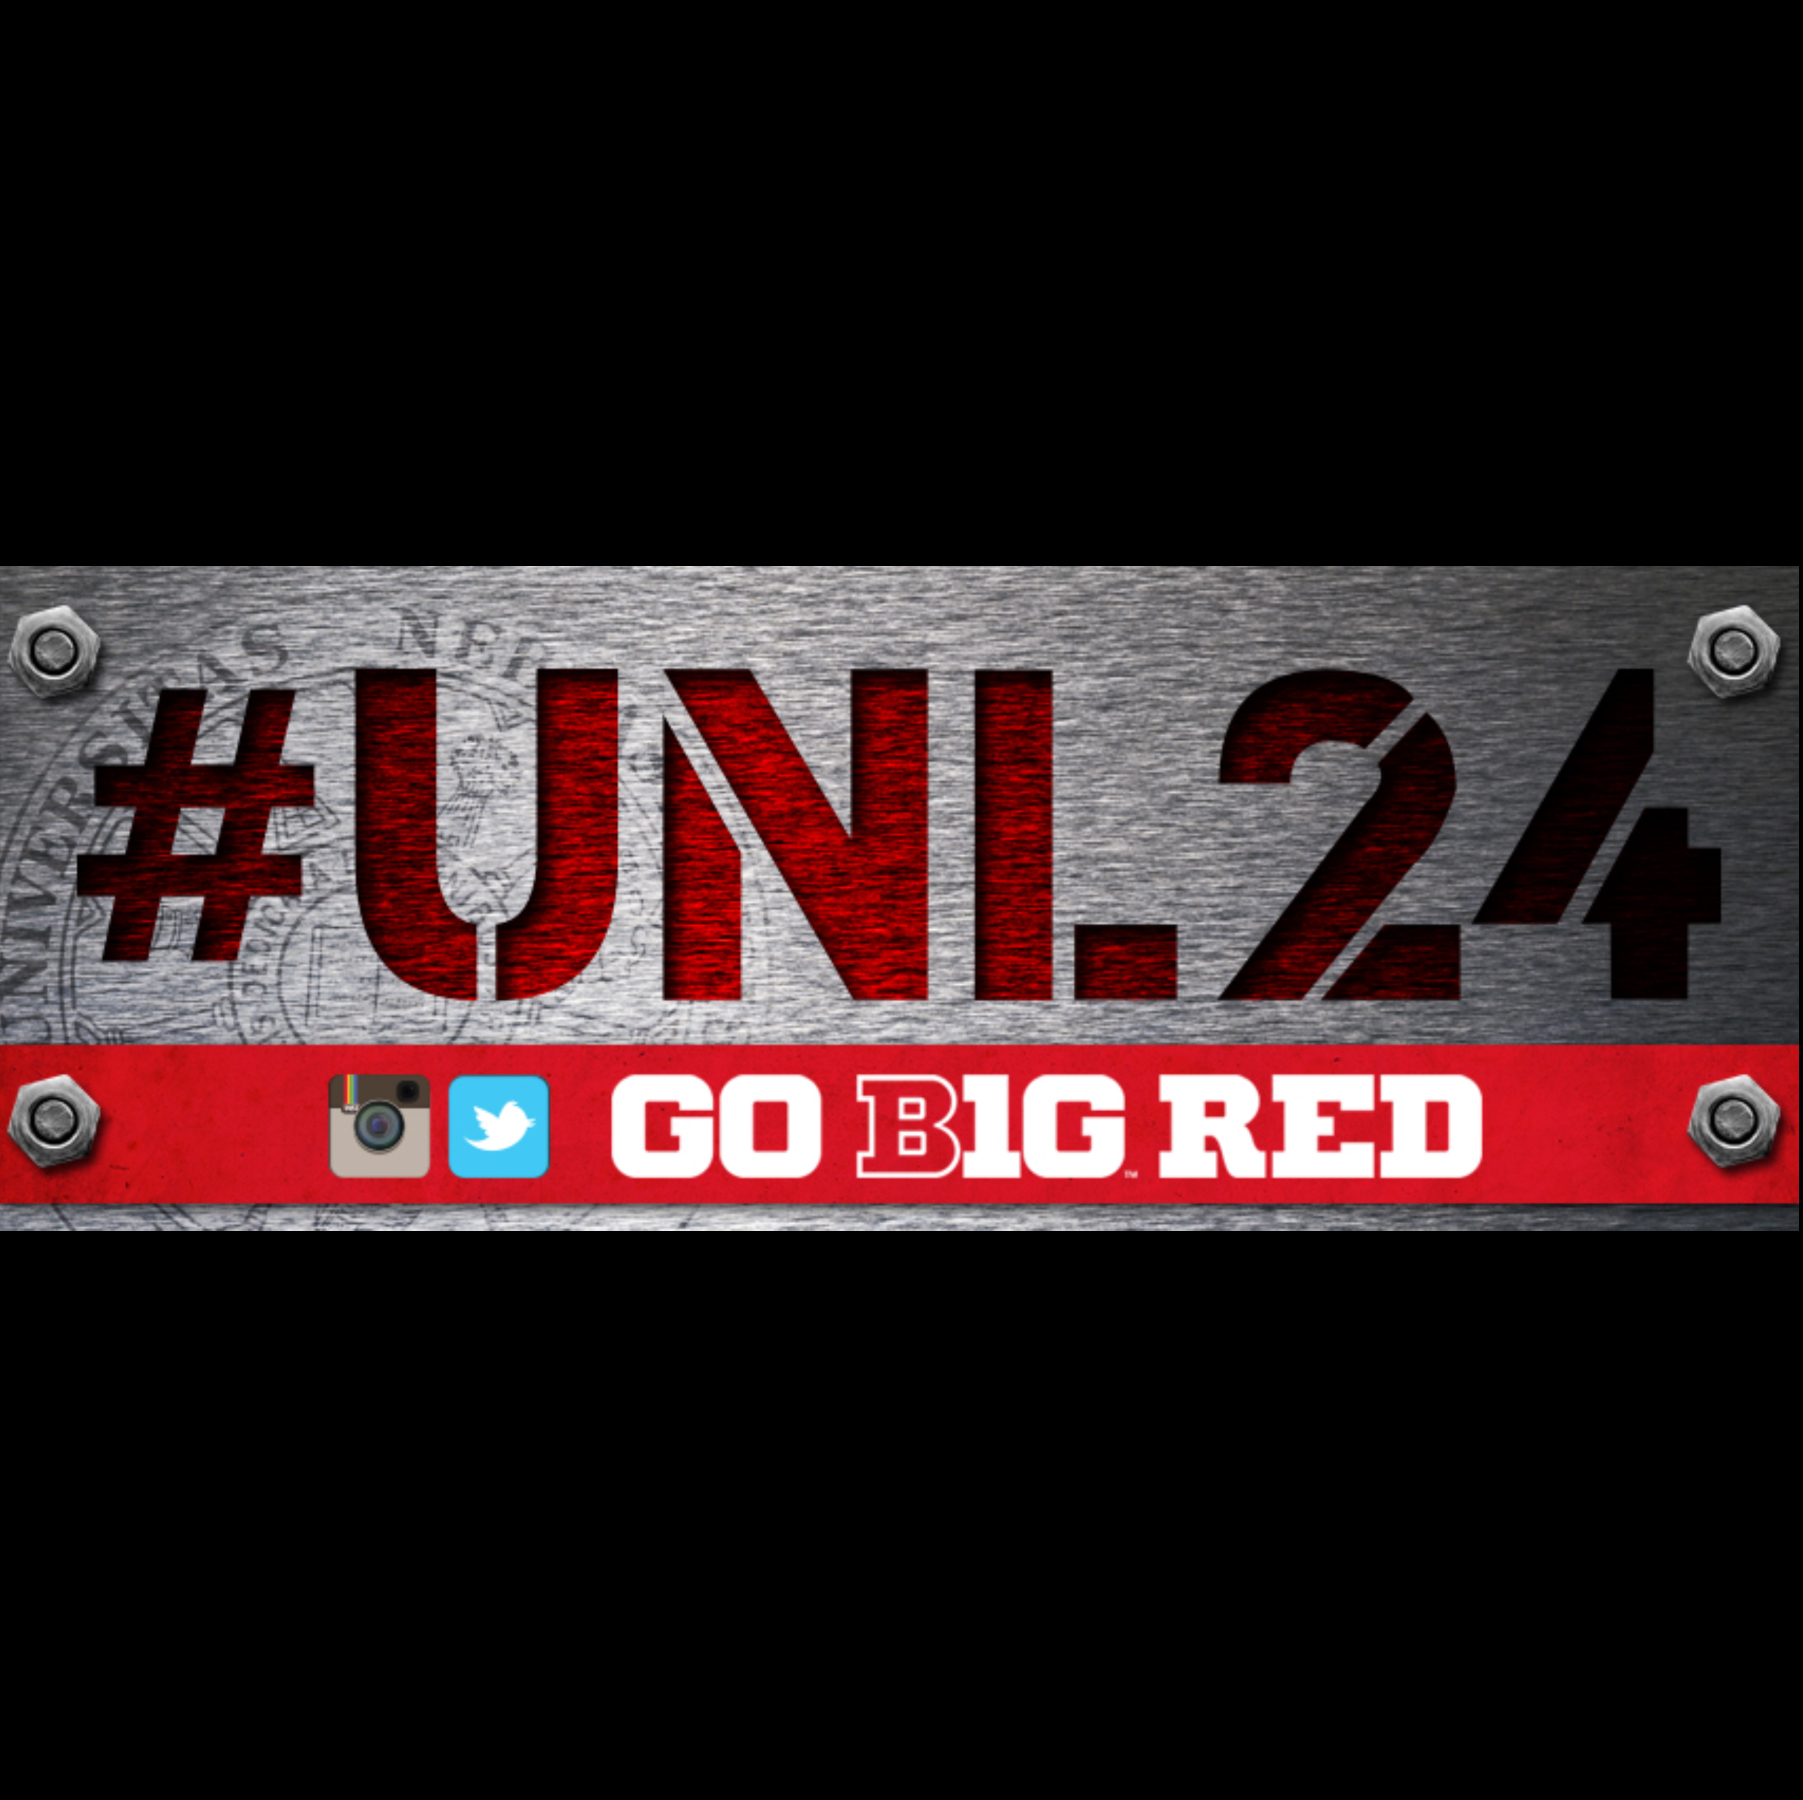 Post #UNL24 on Sept. 24